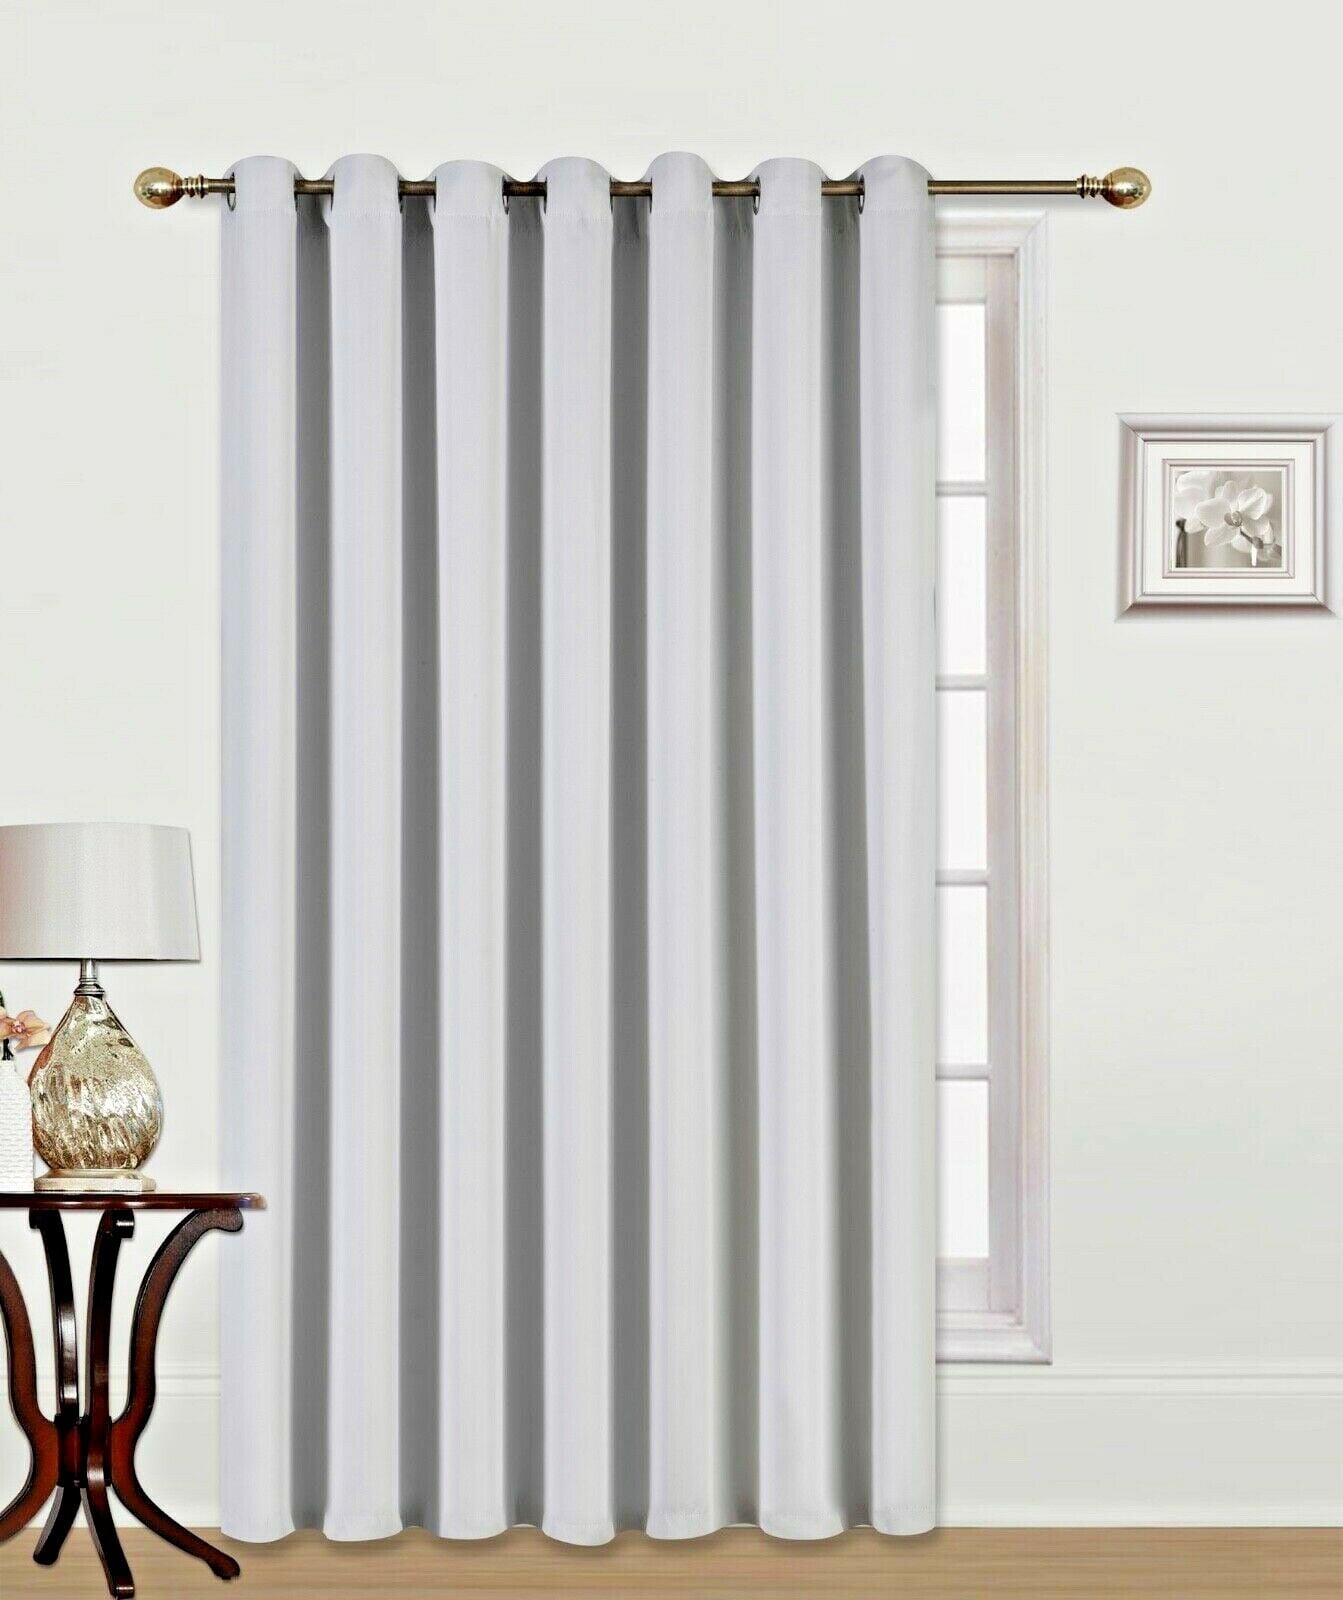 K100 Thermal White Blackout Panel 1pc, 3 Panel Sliding Patio Door Curtains